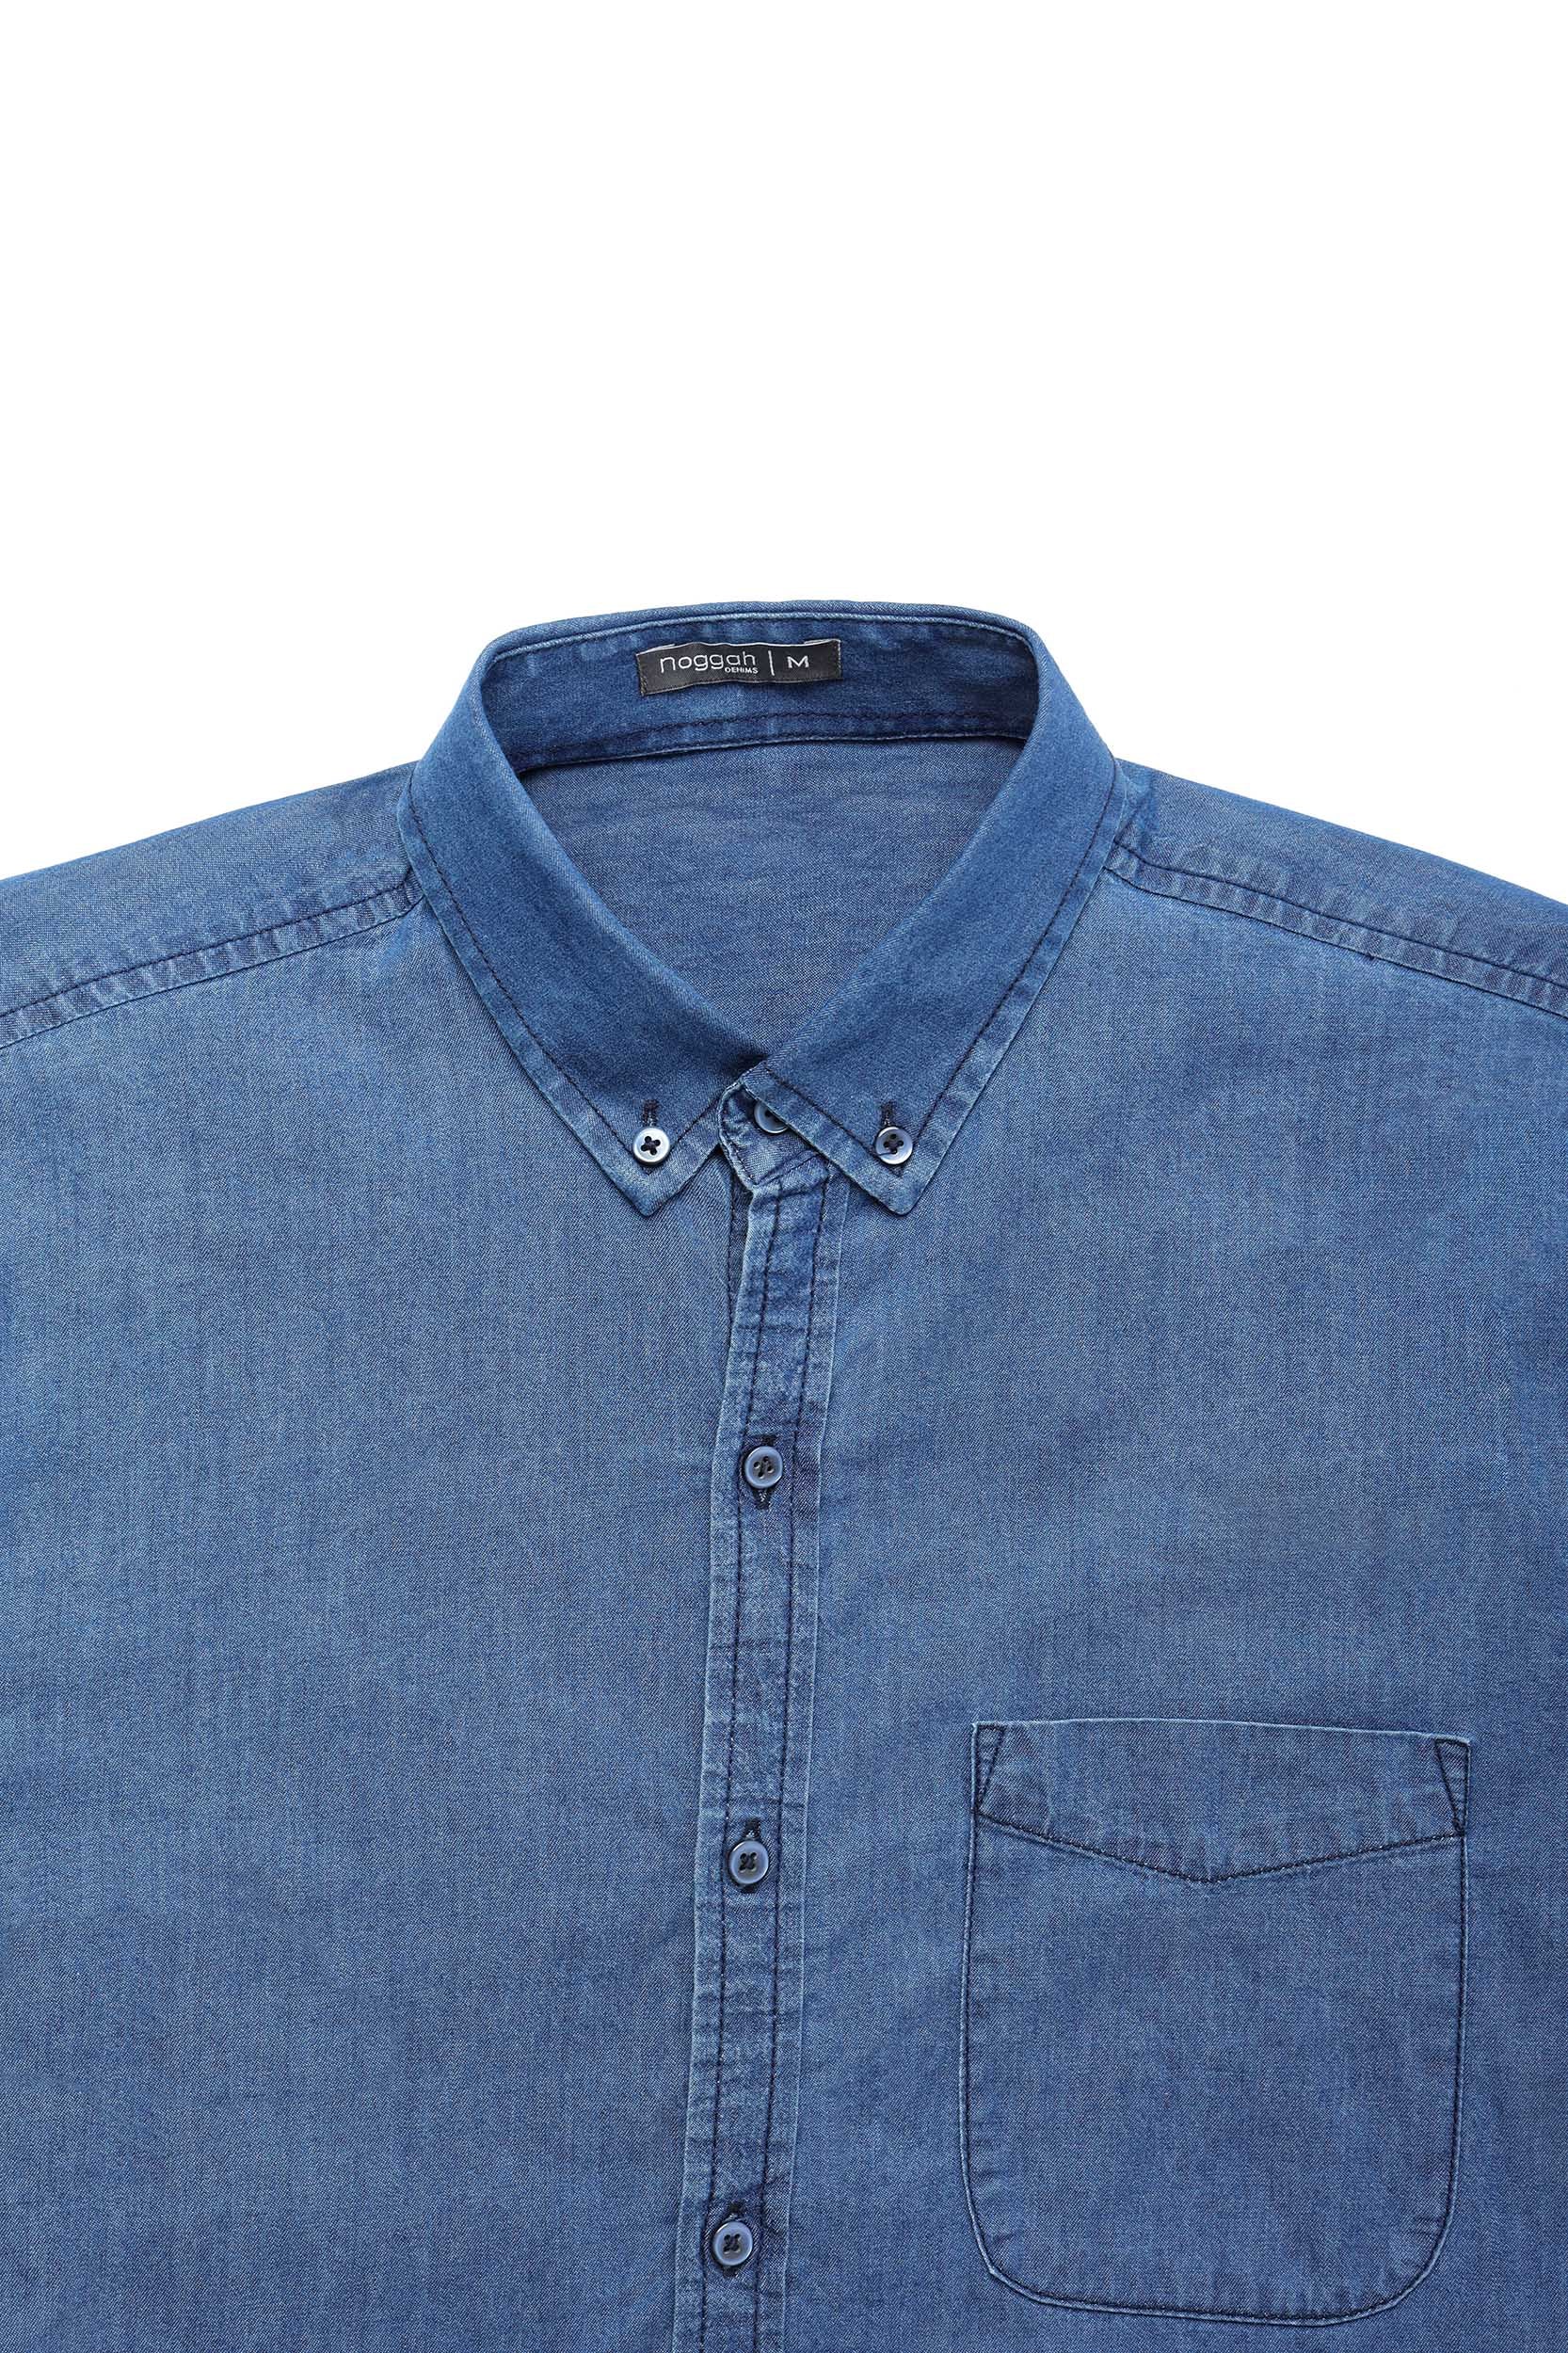 Venezia Jeans Denim Shirt Women Plus 18/20 Blue Button Up Short Sleeve Shirt  New | eBay